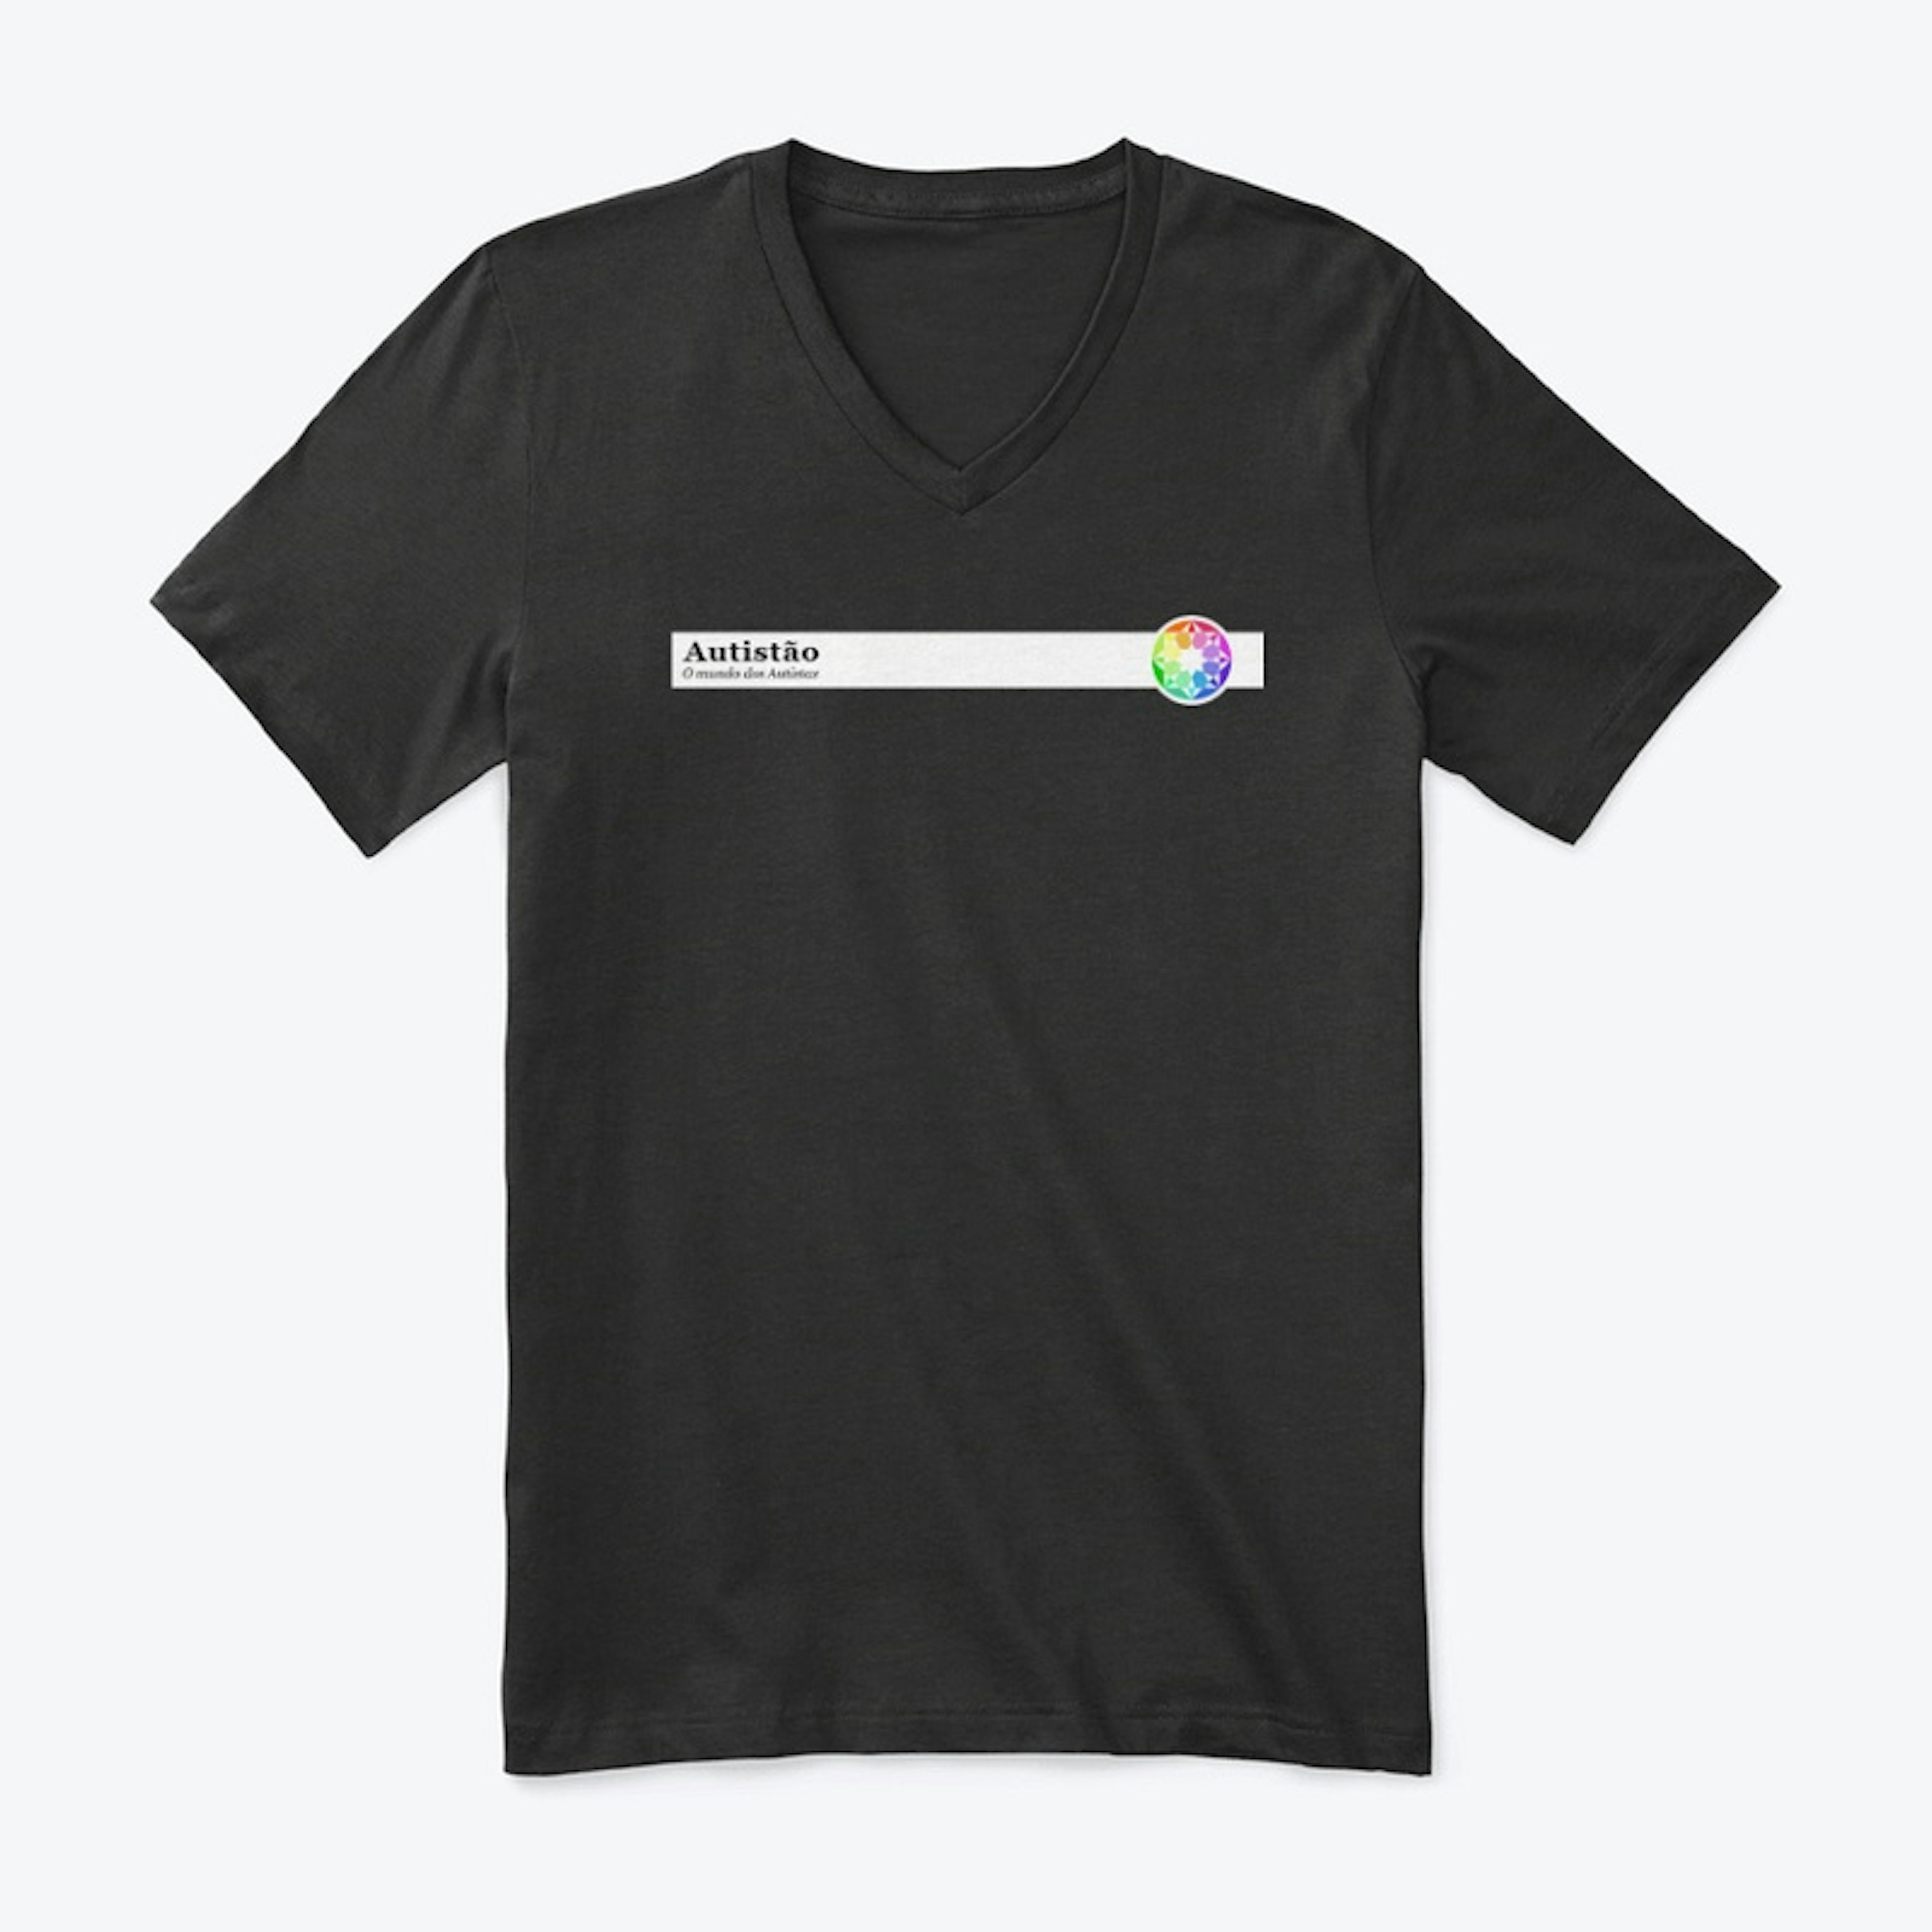 Camiseta minimalista do Autistão [PT]